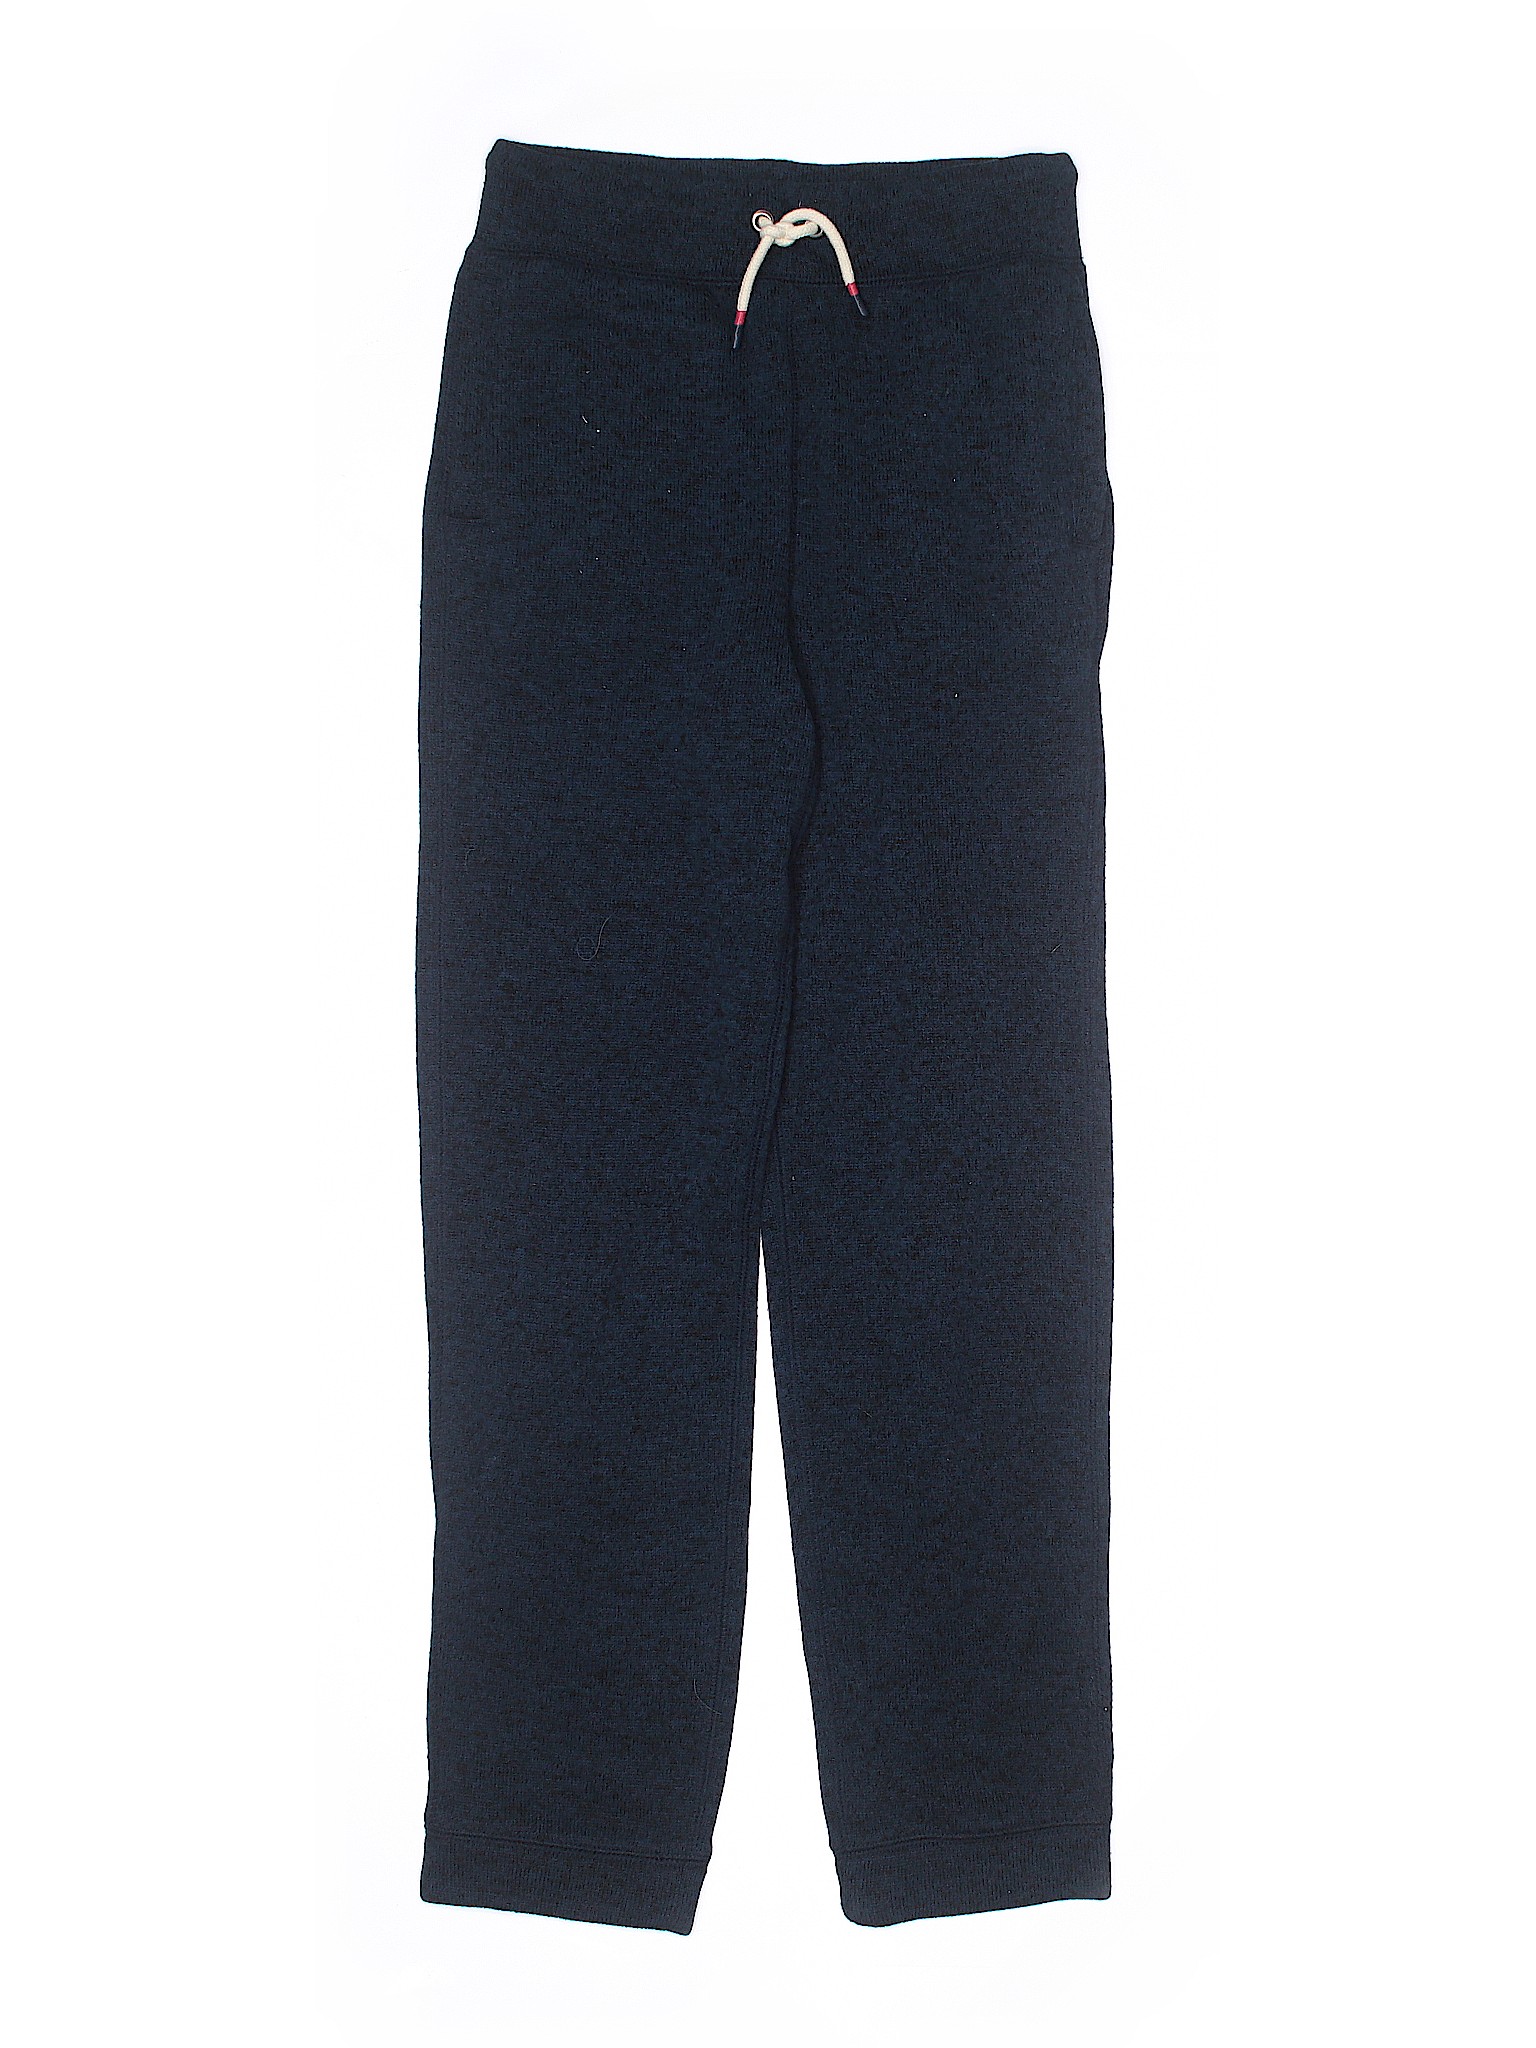 Gap Kids Boys Blue Sweatpants XL Youth | eBay